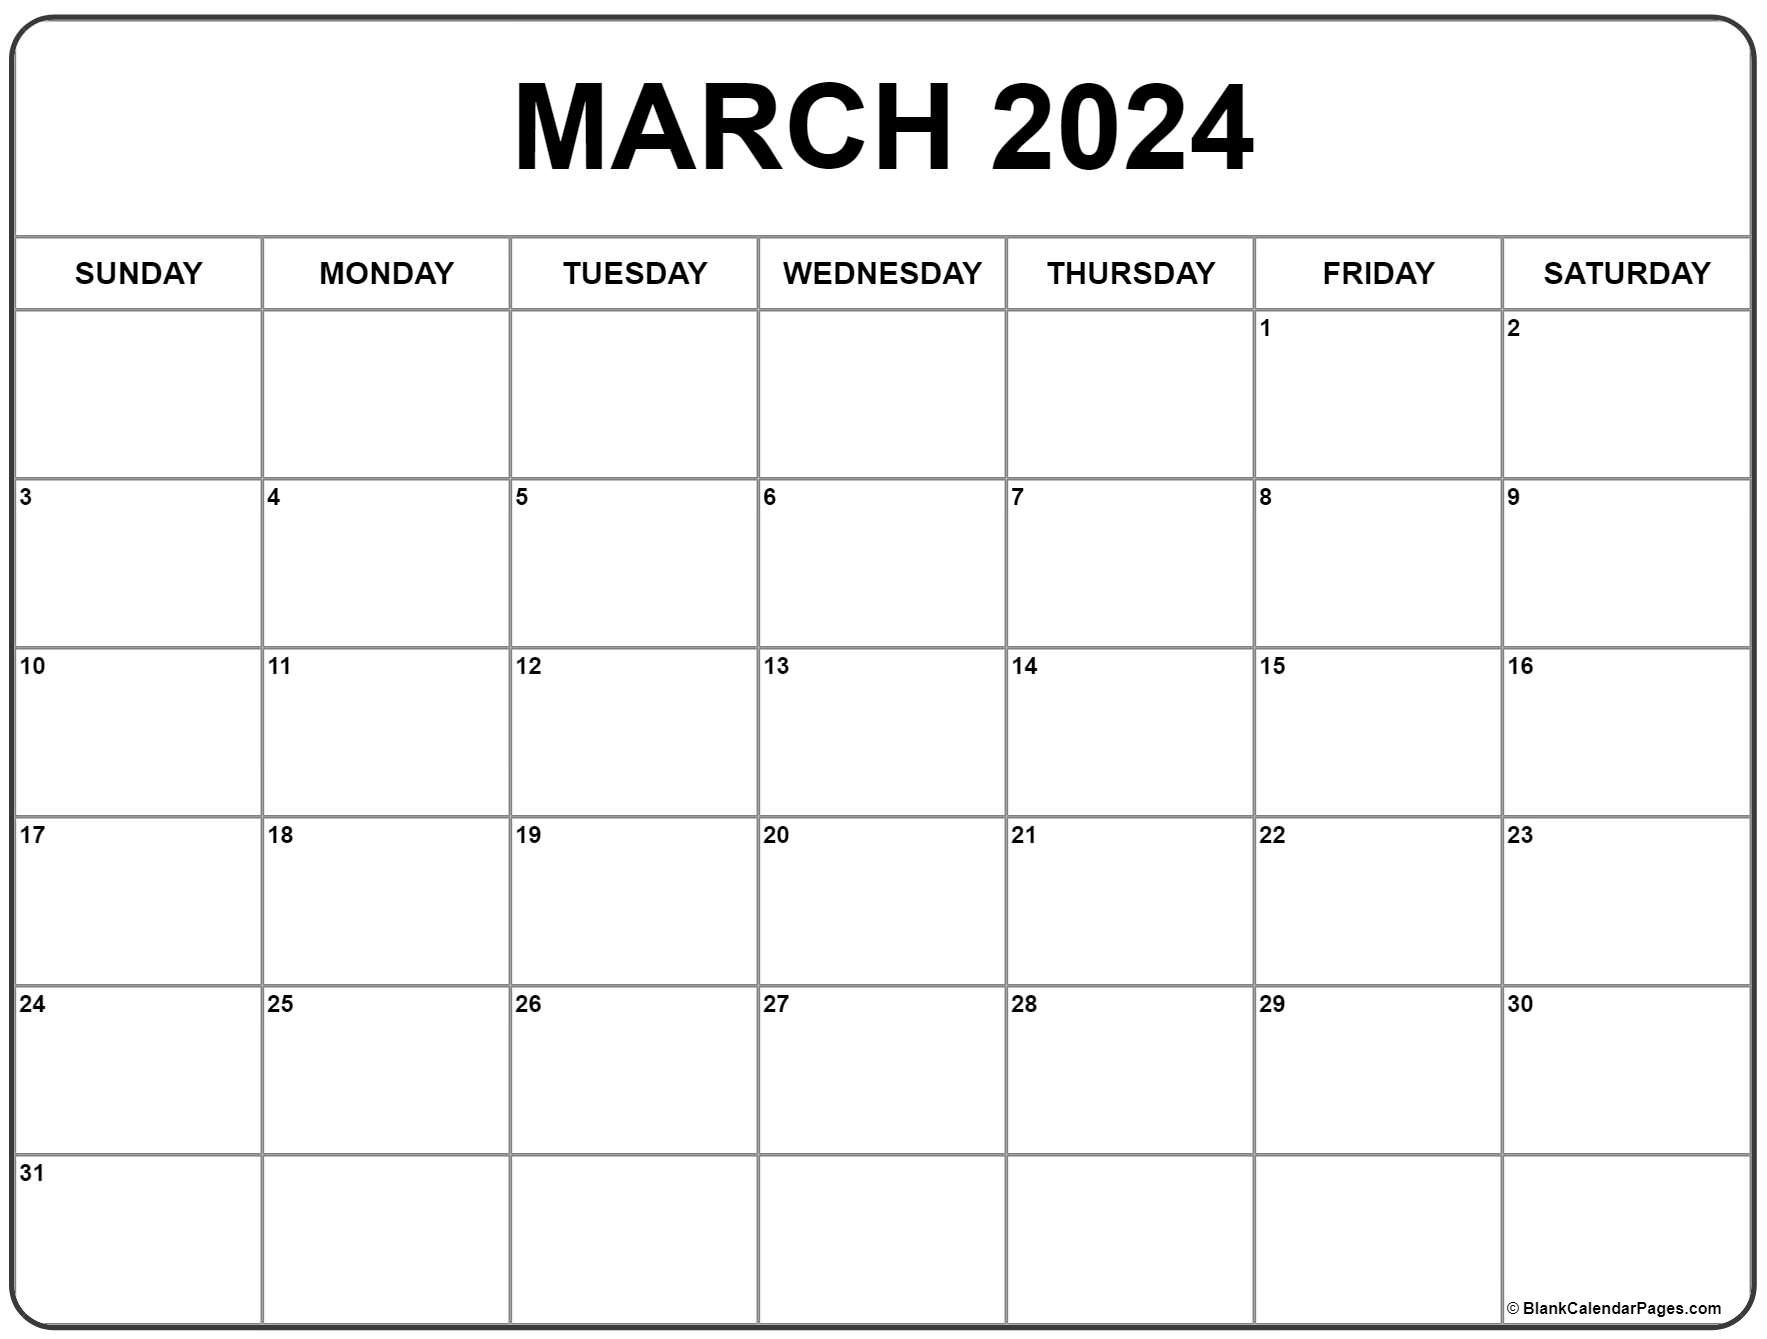 March 2024 Calendar | Free Printable Calendar | Calendar March 2024 Calendar Printable